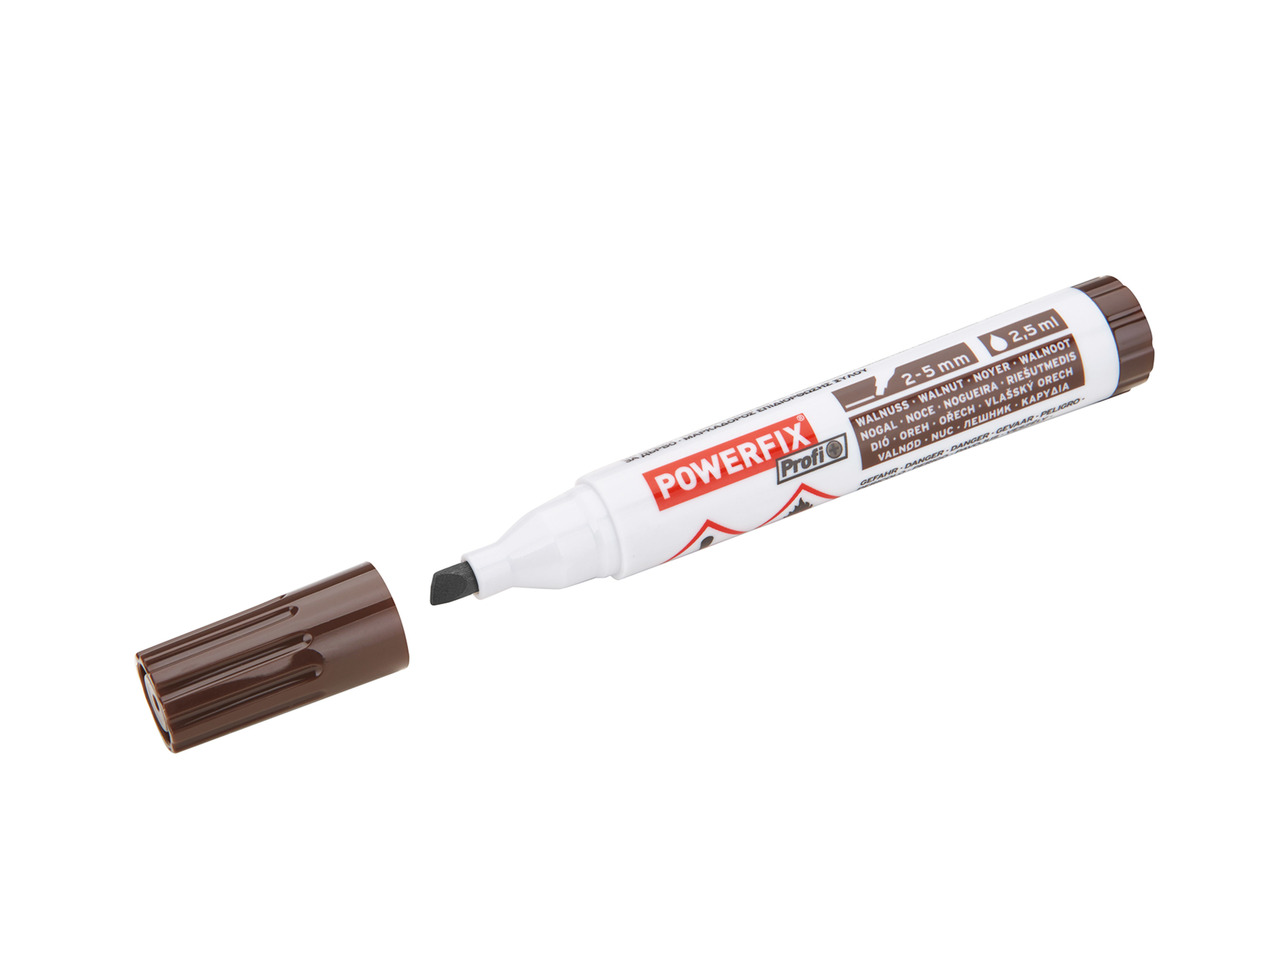 Powerfix Profi Wood Touch-up / Grouting Pen1